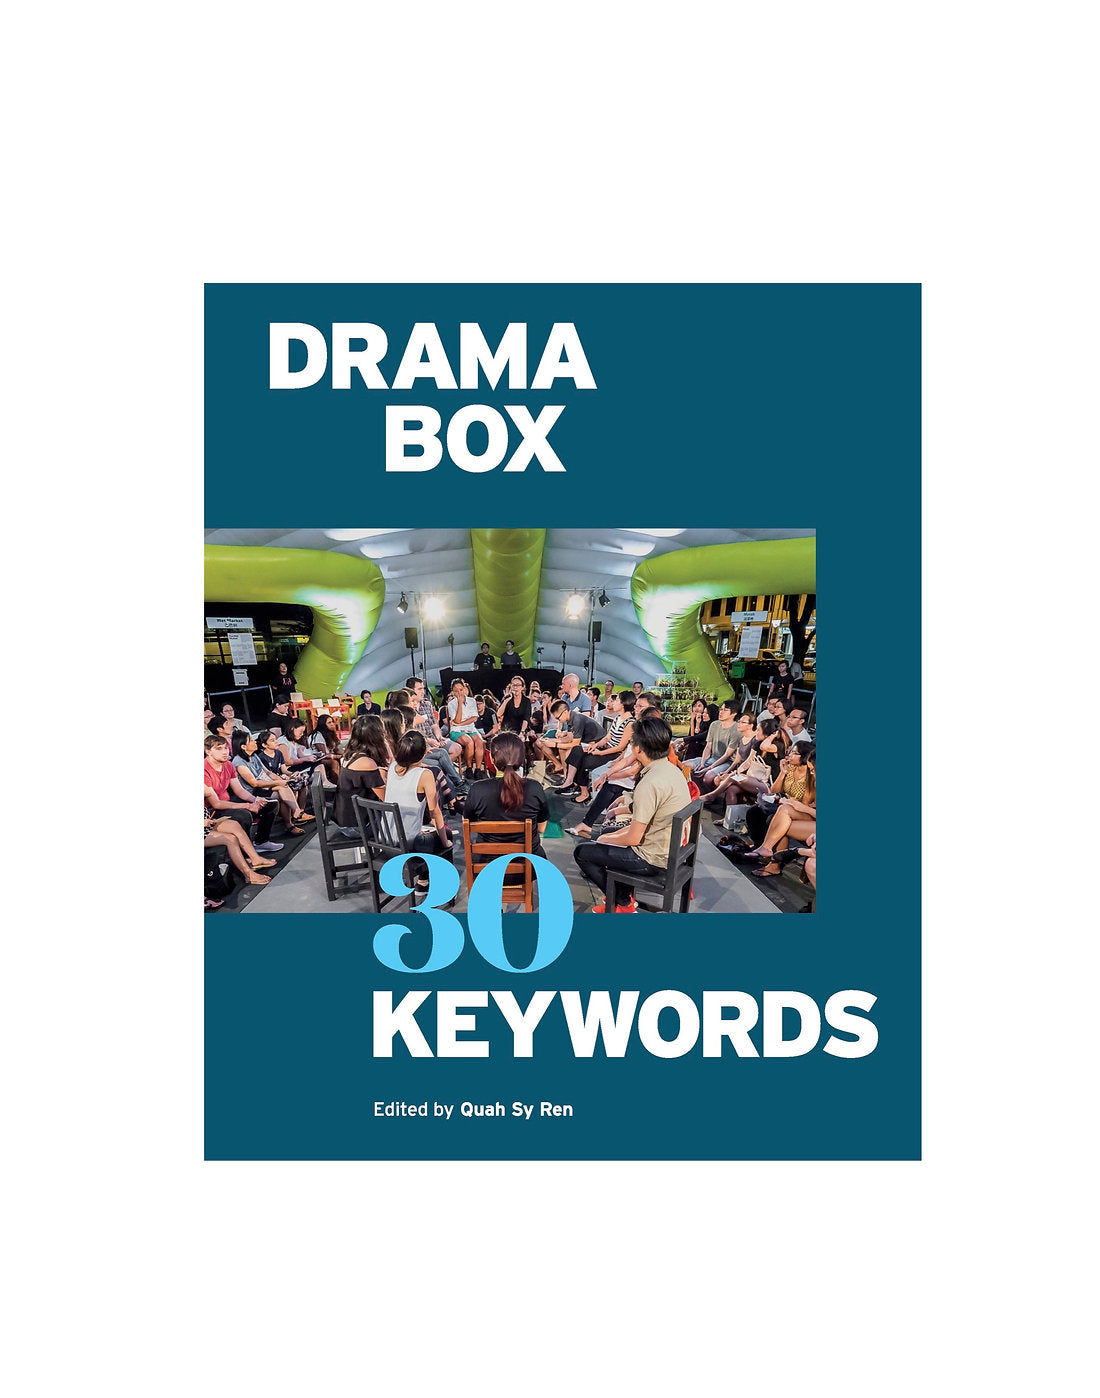 Drama Box 30 Keywords /by Quah Sy Ren